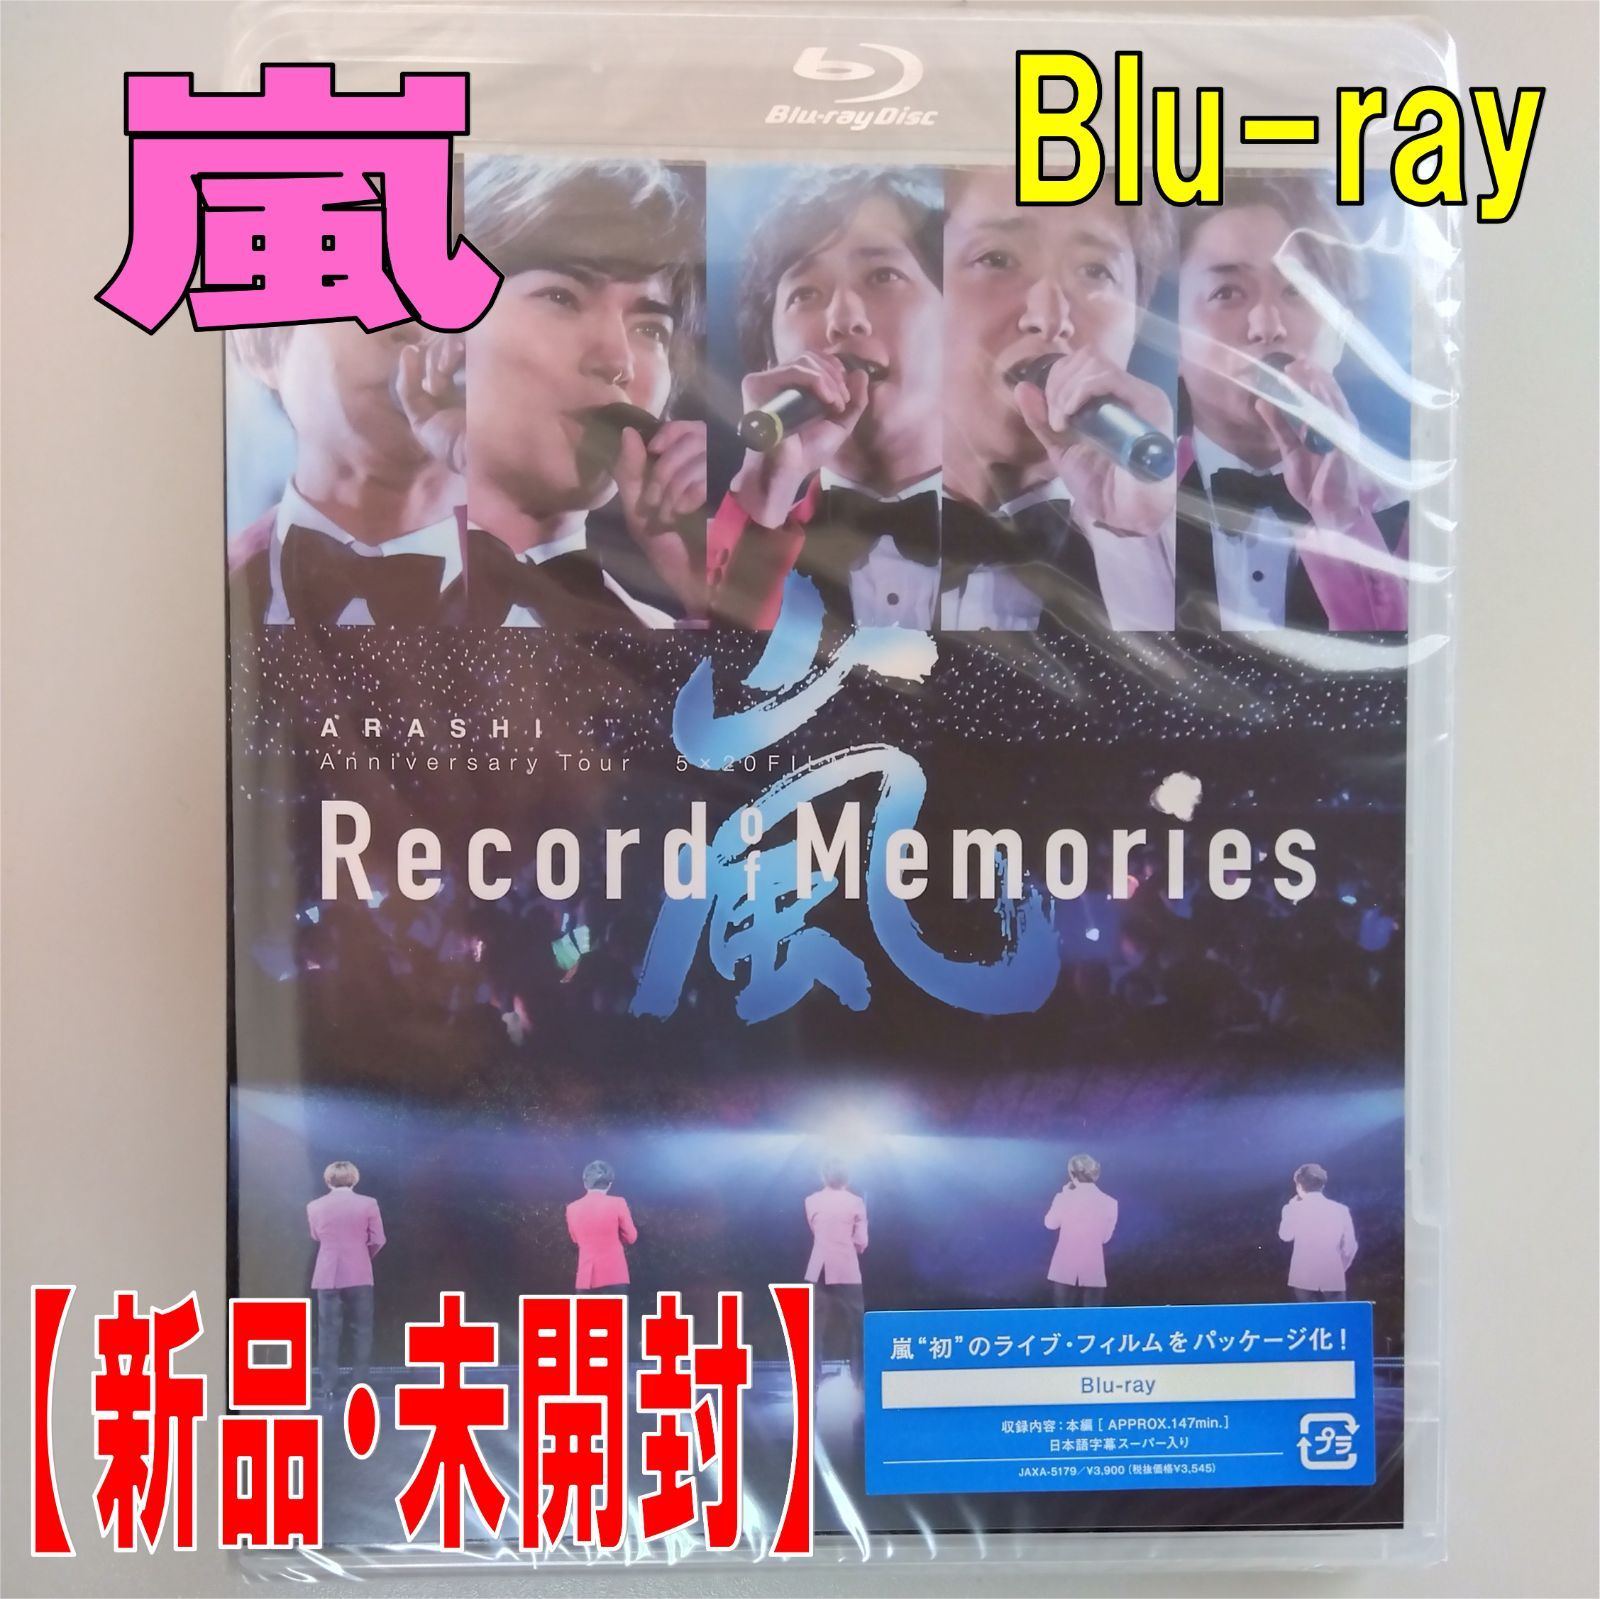 Blu-ray】嵐【 ARASHI Anniversary Tour 5×20 FILM 